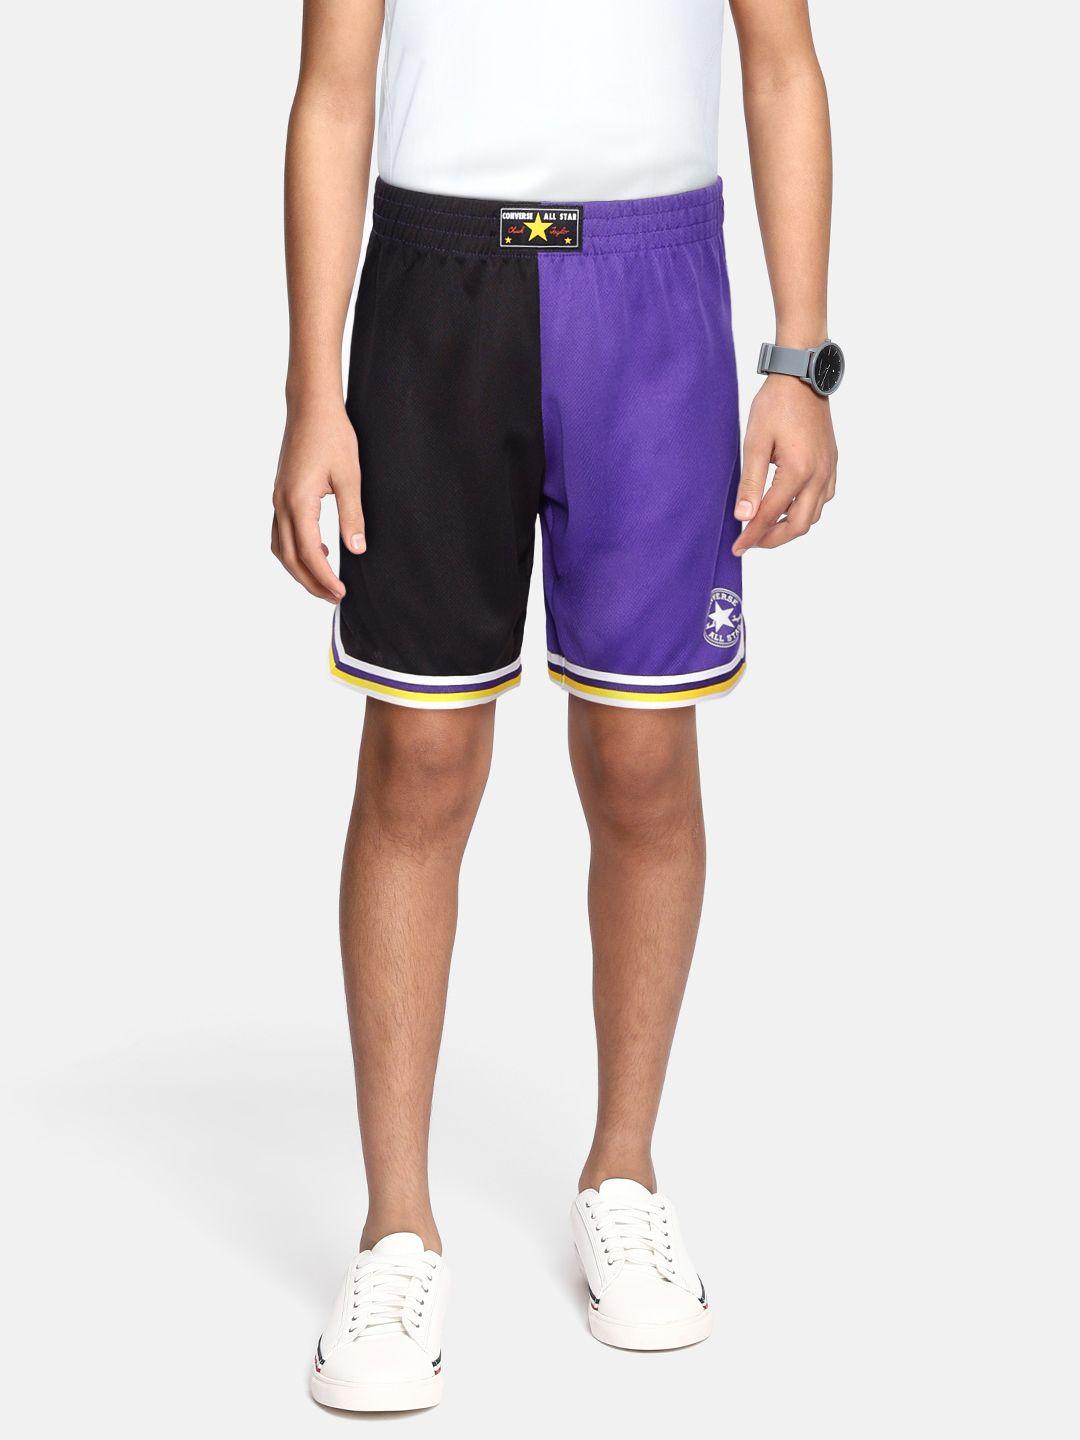 converse-boys-black-&-purple-colourblocked-shorts